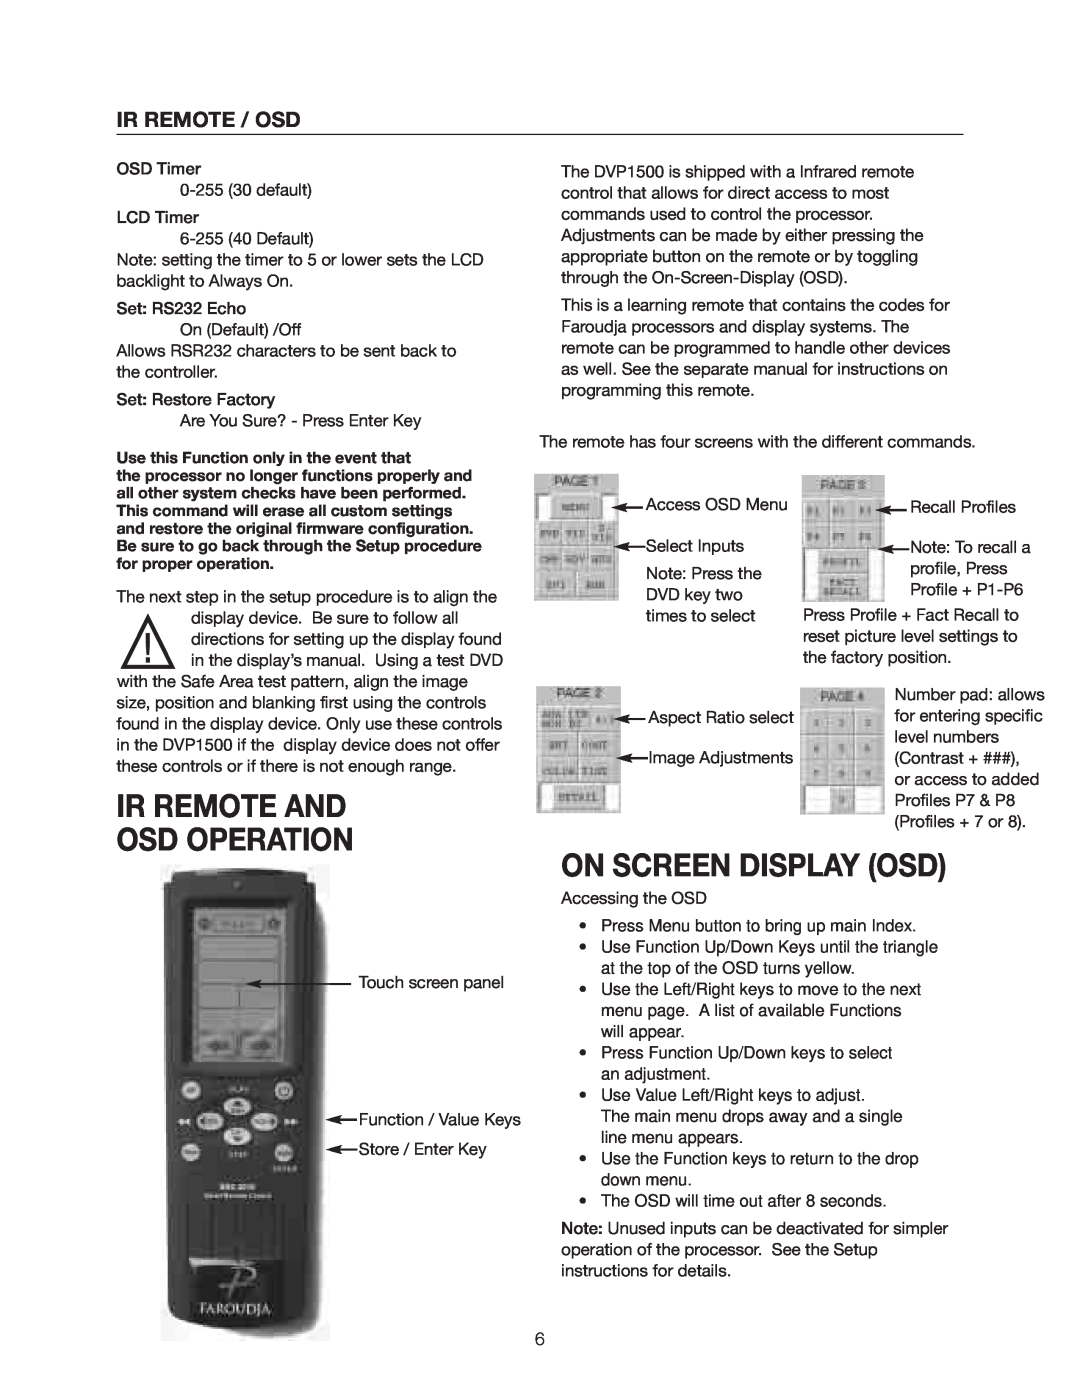 Meridian Audio DVP1500 manual Ir Remote And Osd Operation, On Screen Display Osd, Ir Remote / Osd 